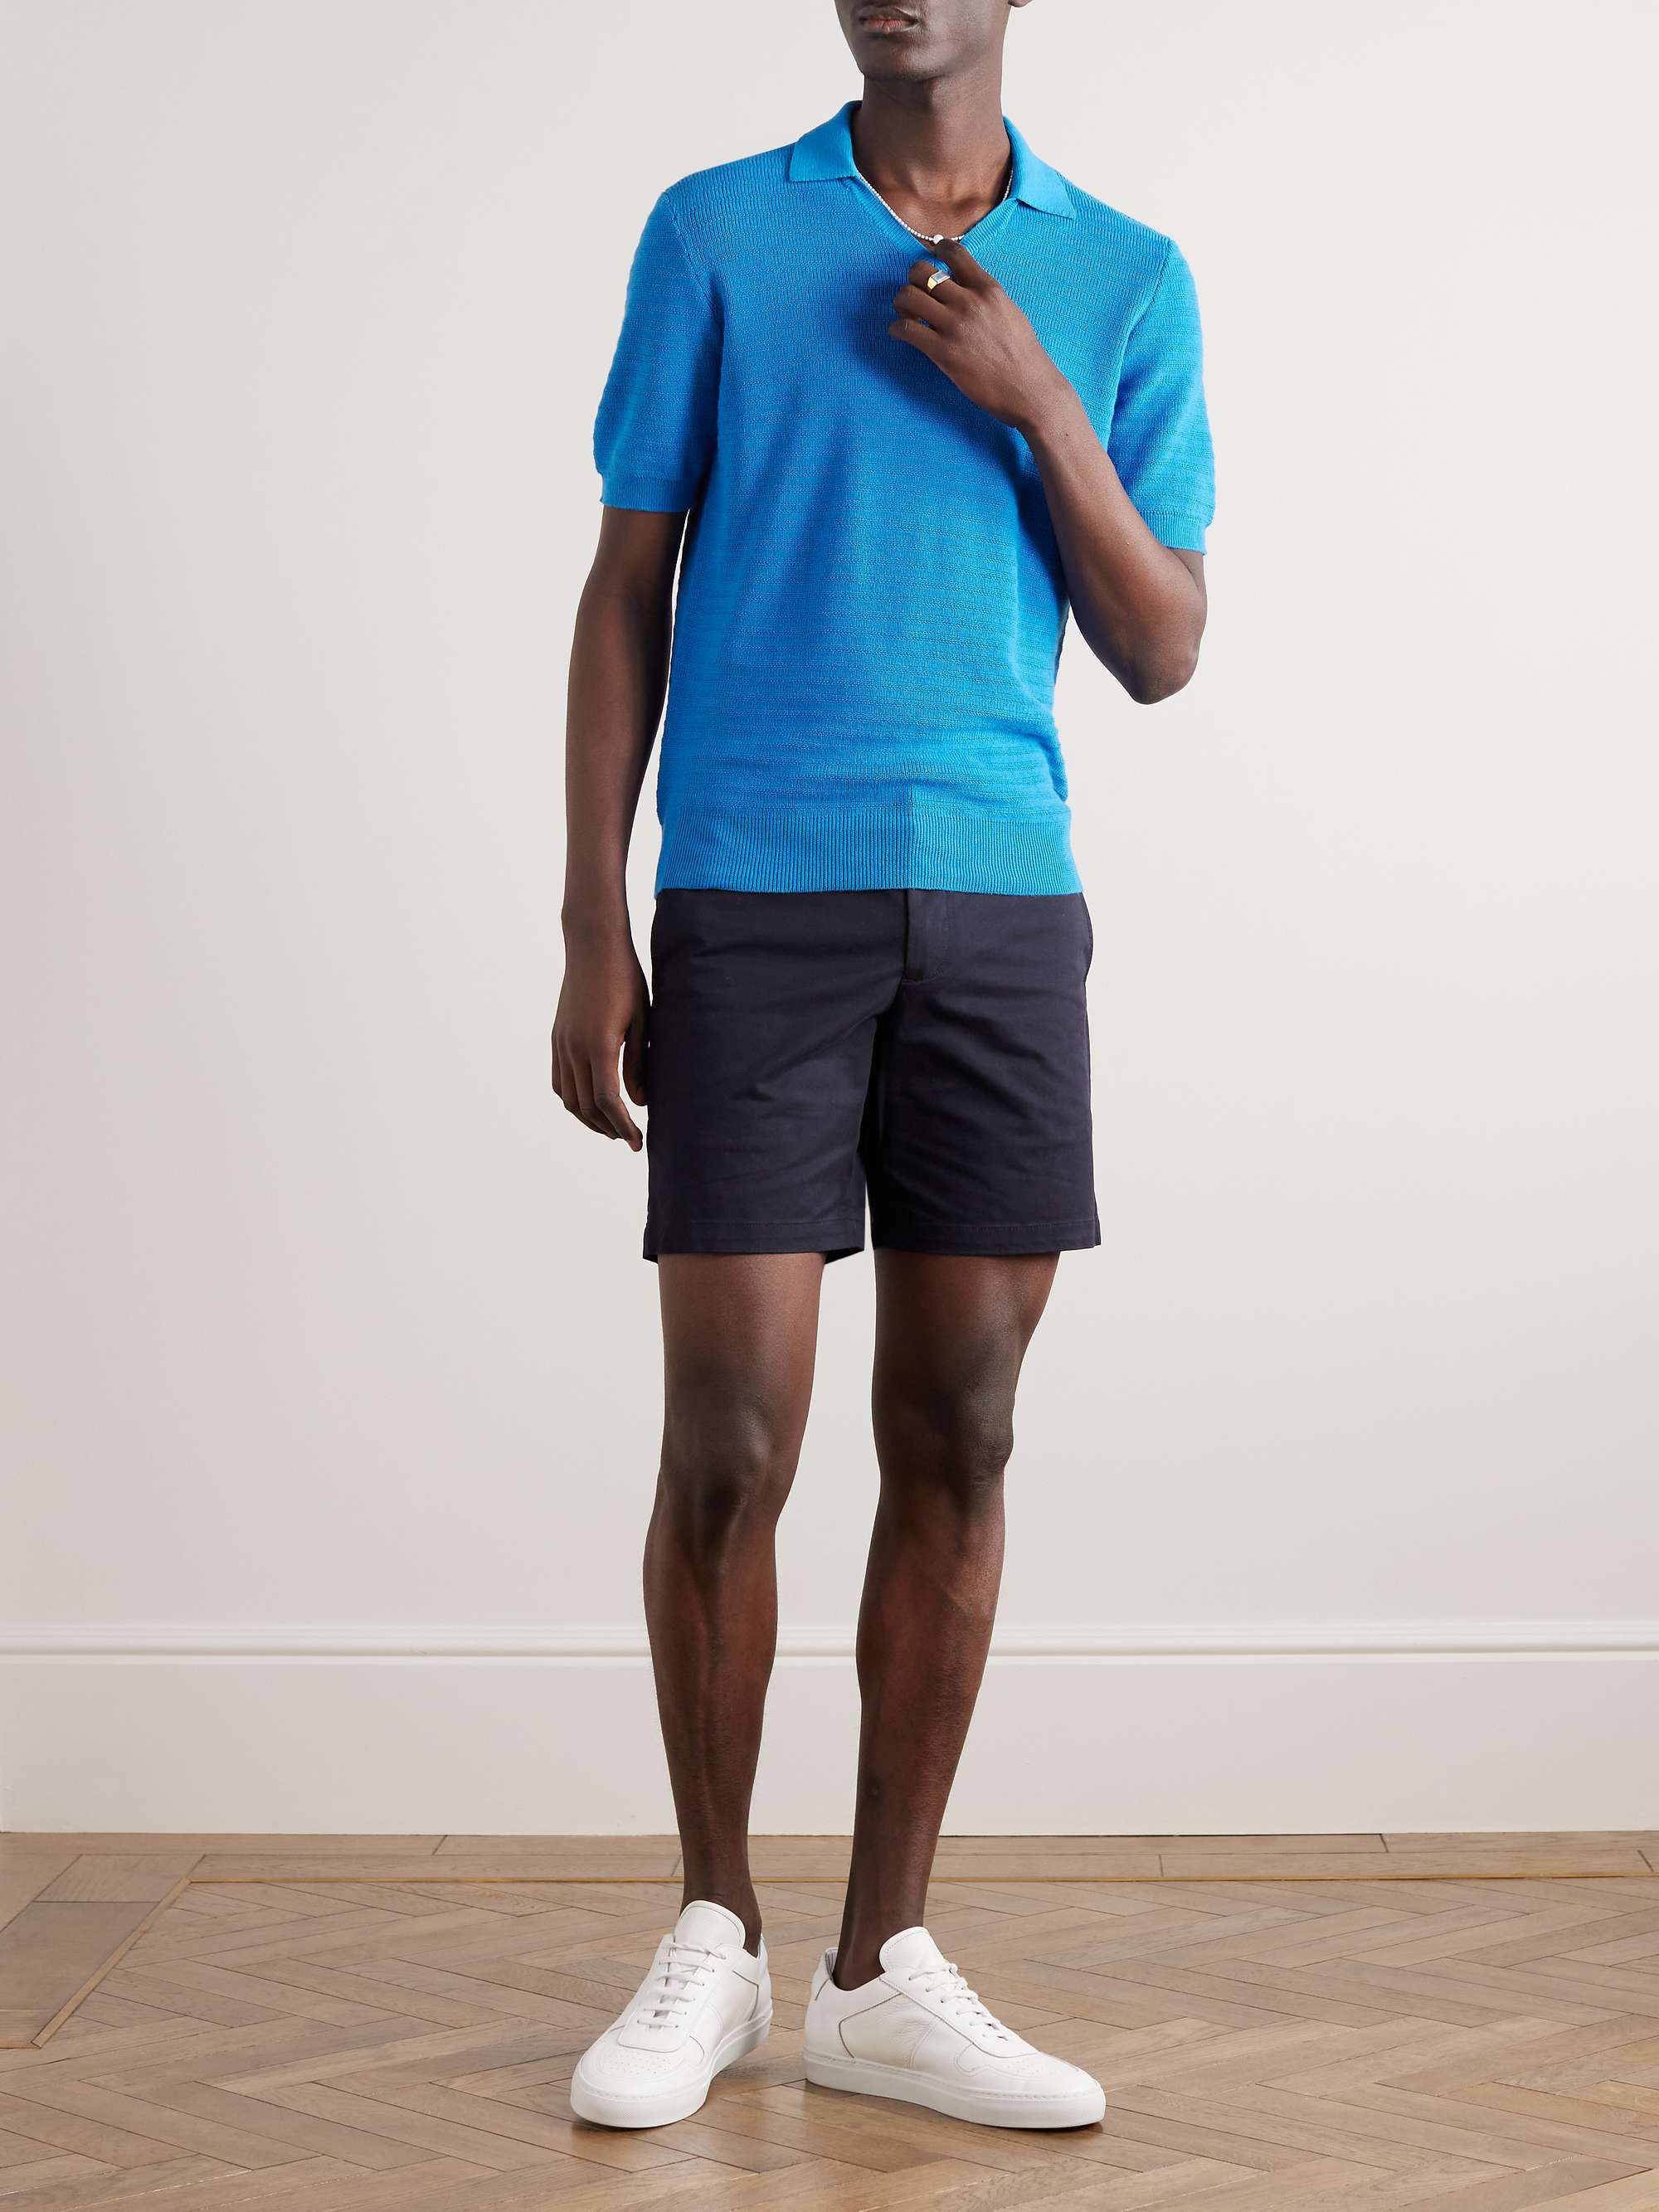 CLUB MONACO Baxter Cotton-Blend Twill Shorts